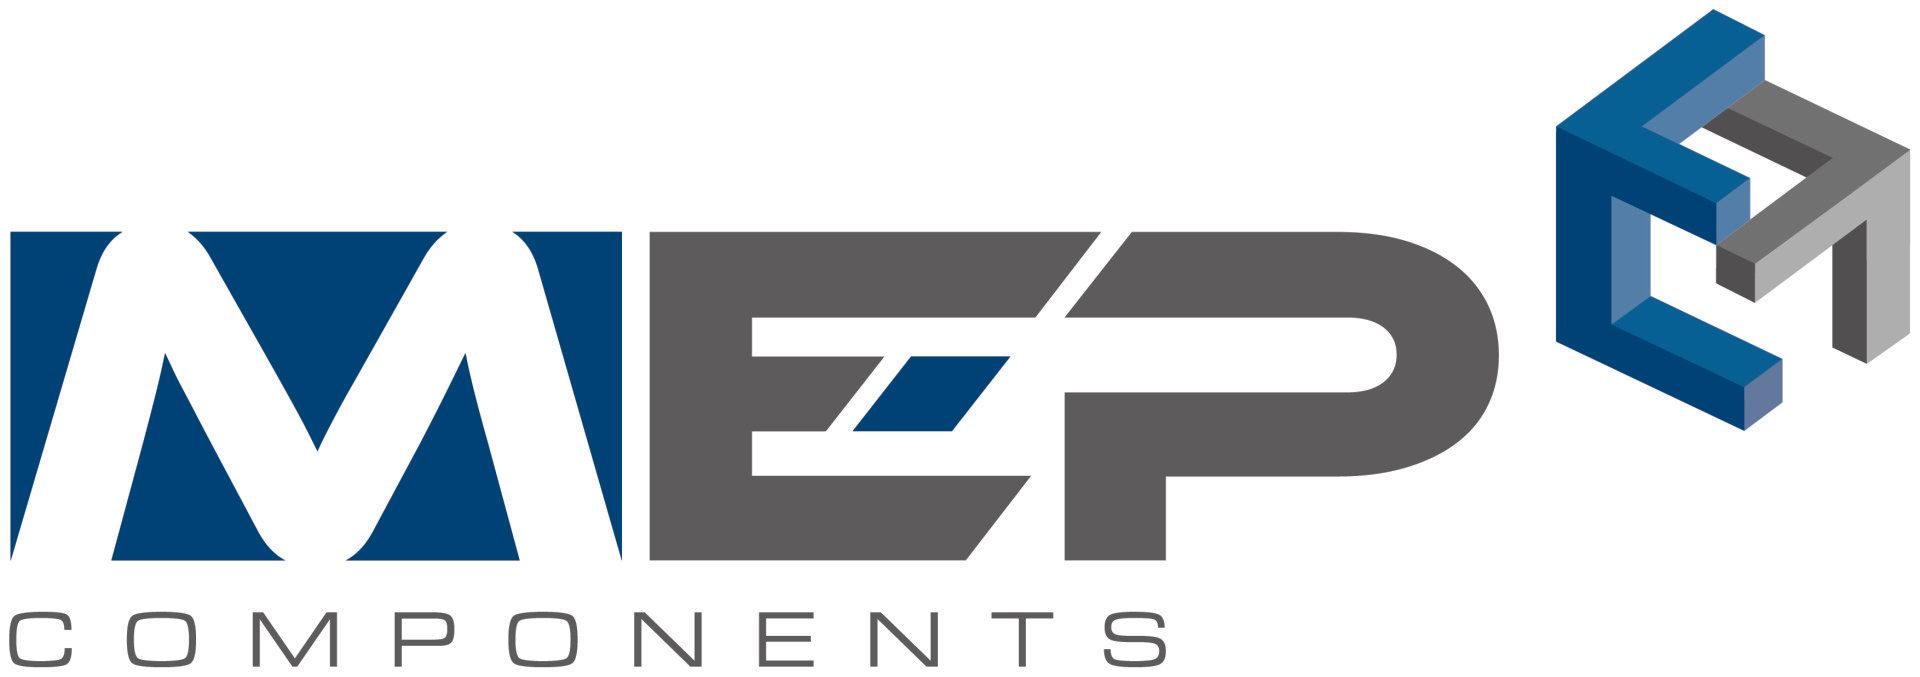 MEP Components Logo